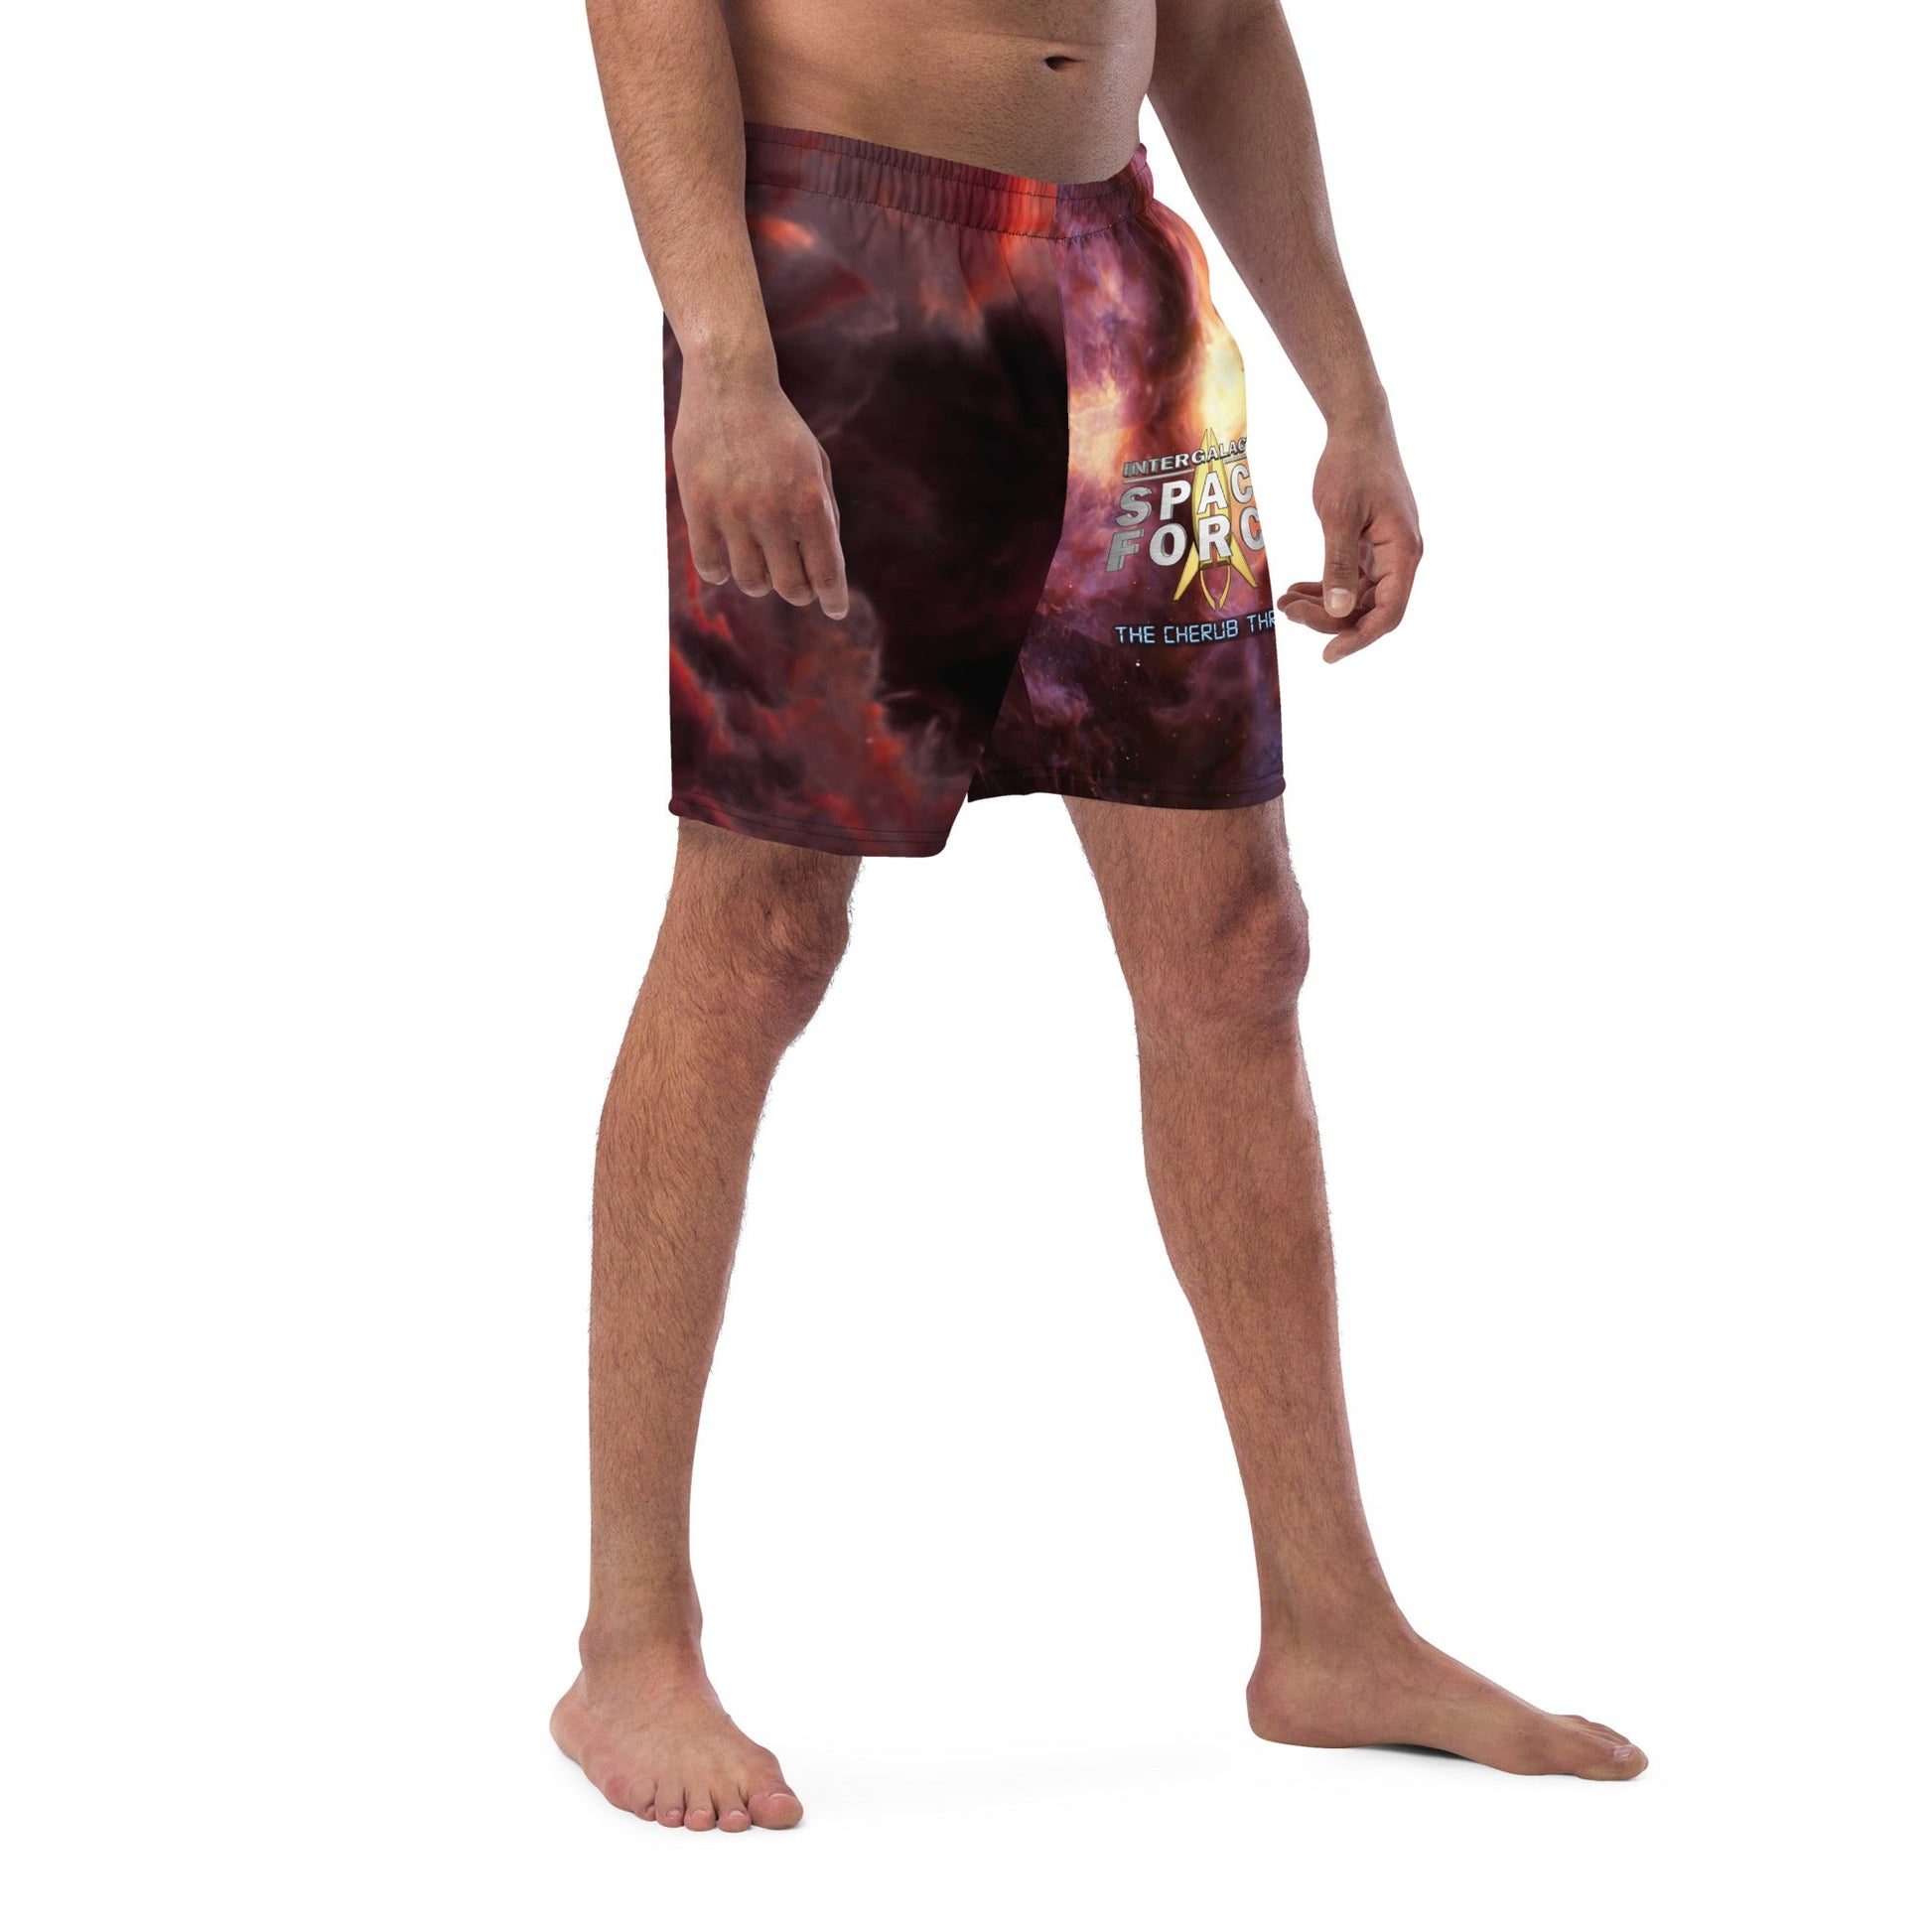 Men's swim trunks | Intergalactic Space Force 2 | Nebula and Logo - Spectral Ink Shop - Swimwear -7213322_14636